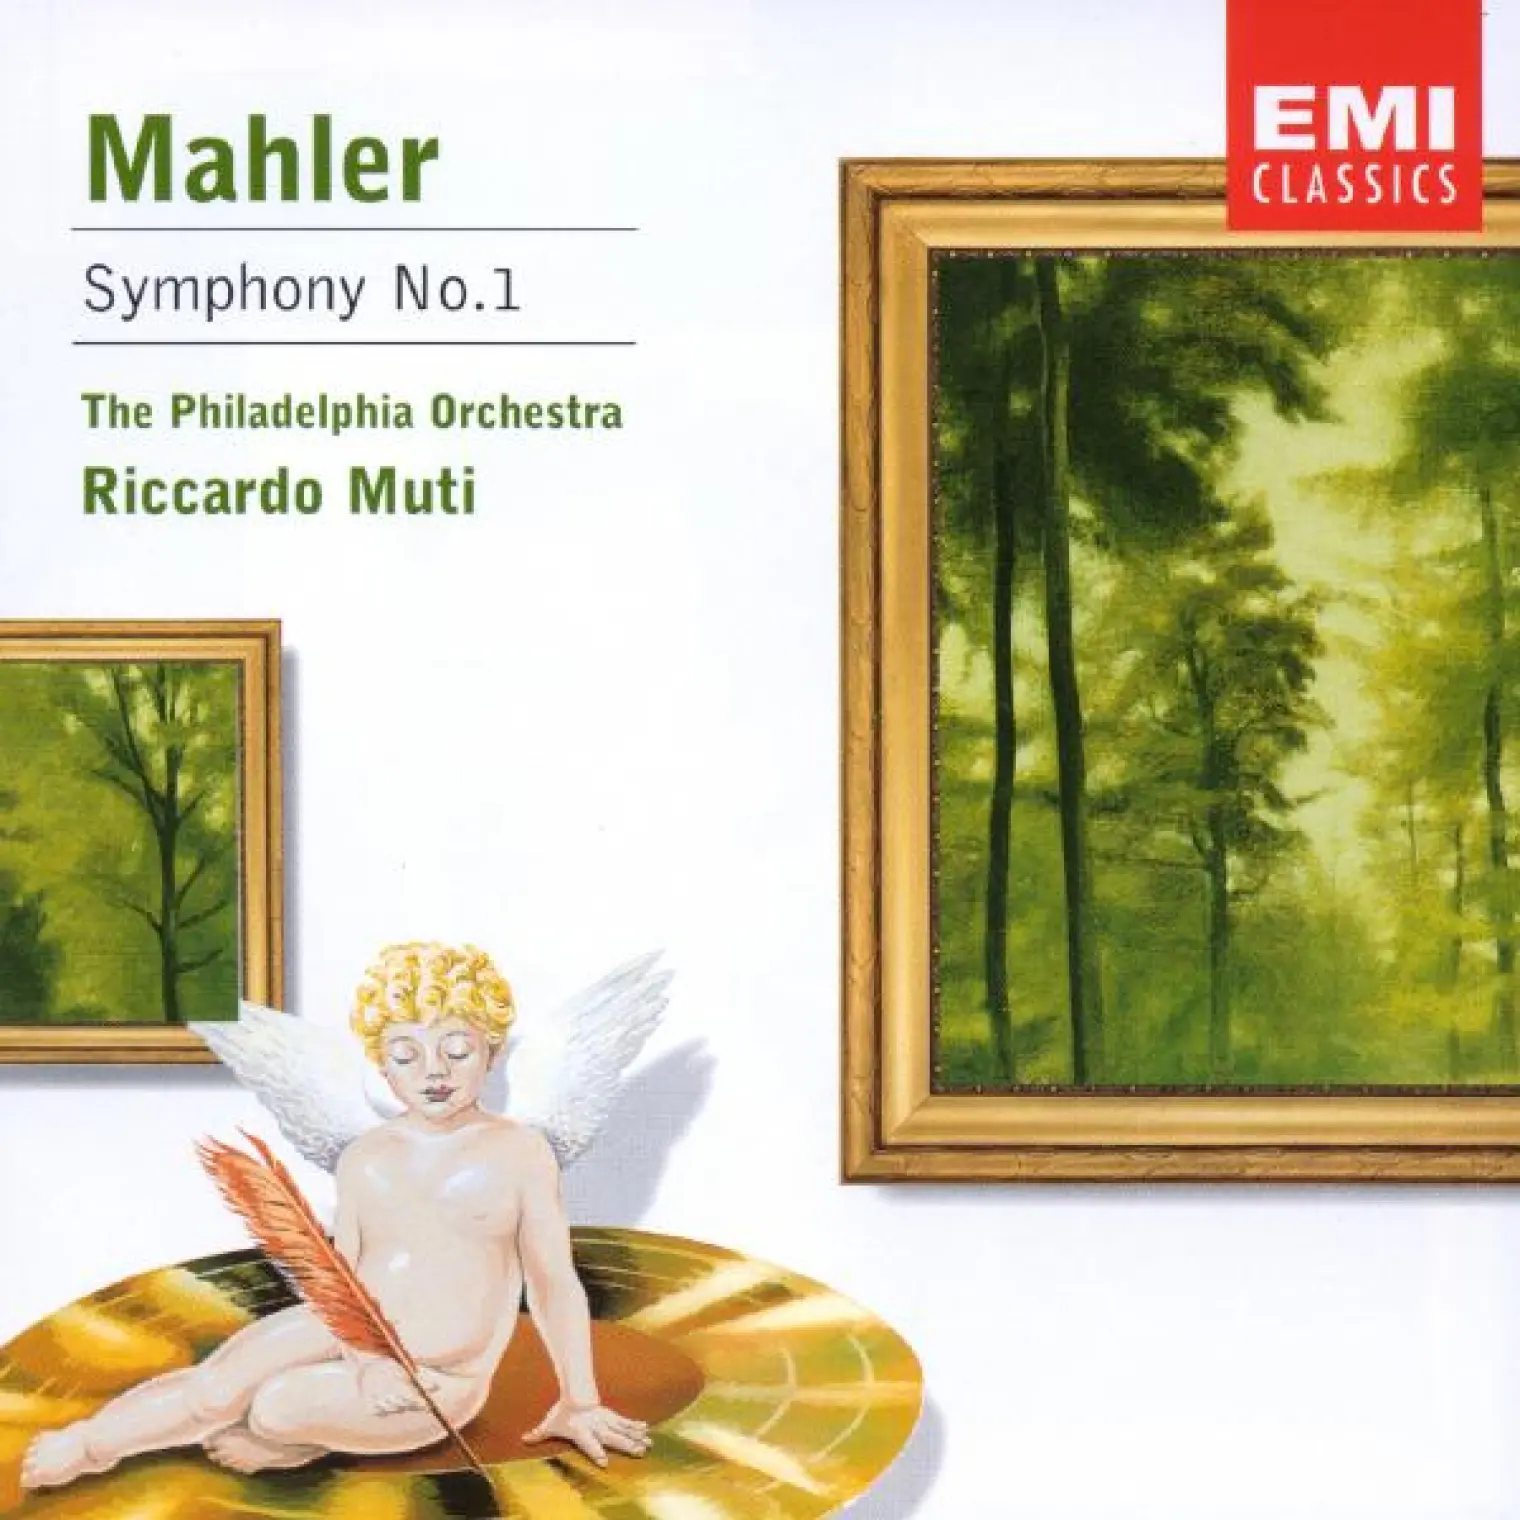 Mahler: Symphony No. 1 "Titan" -  Philadelphia Orchestra 